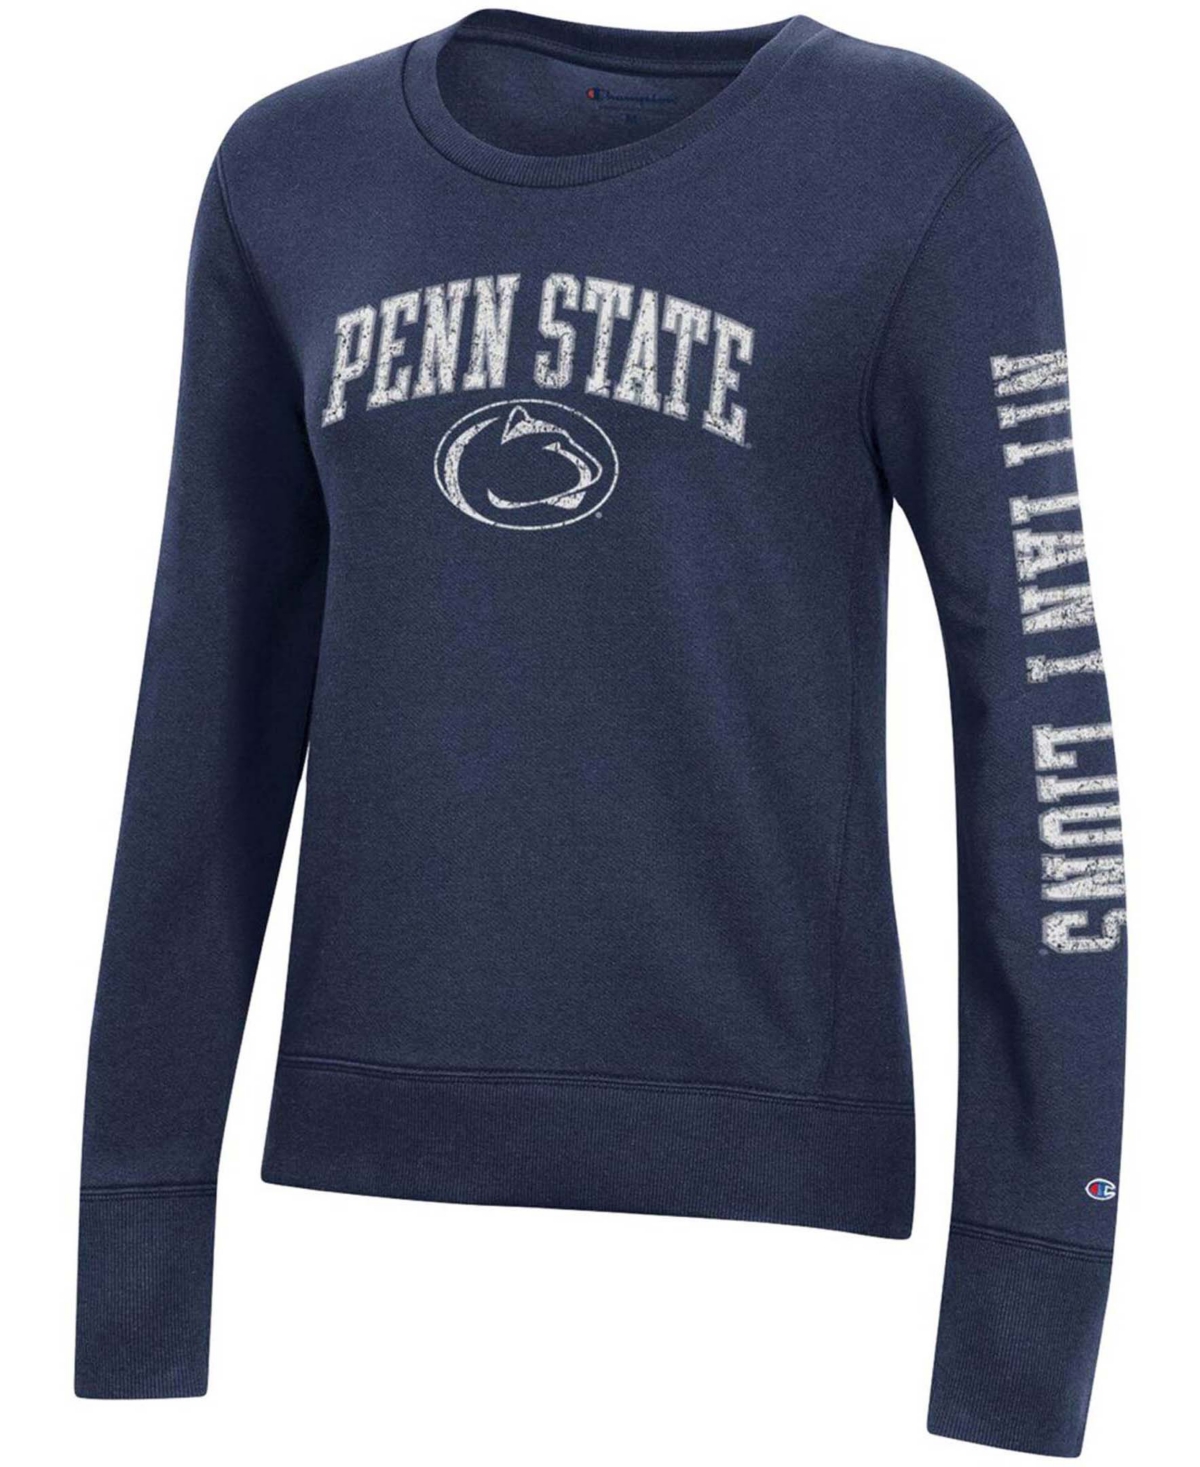 Shop Champion Women's Navy Penn State Nittany Lions University 2.0 Fleece Sweatshirt